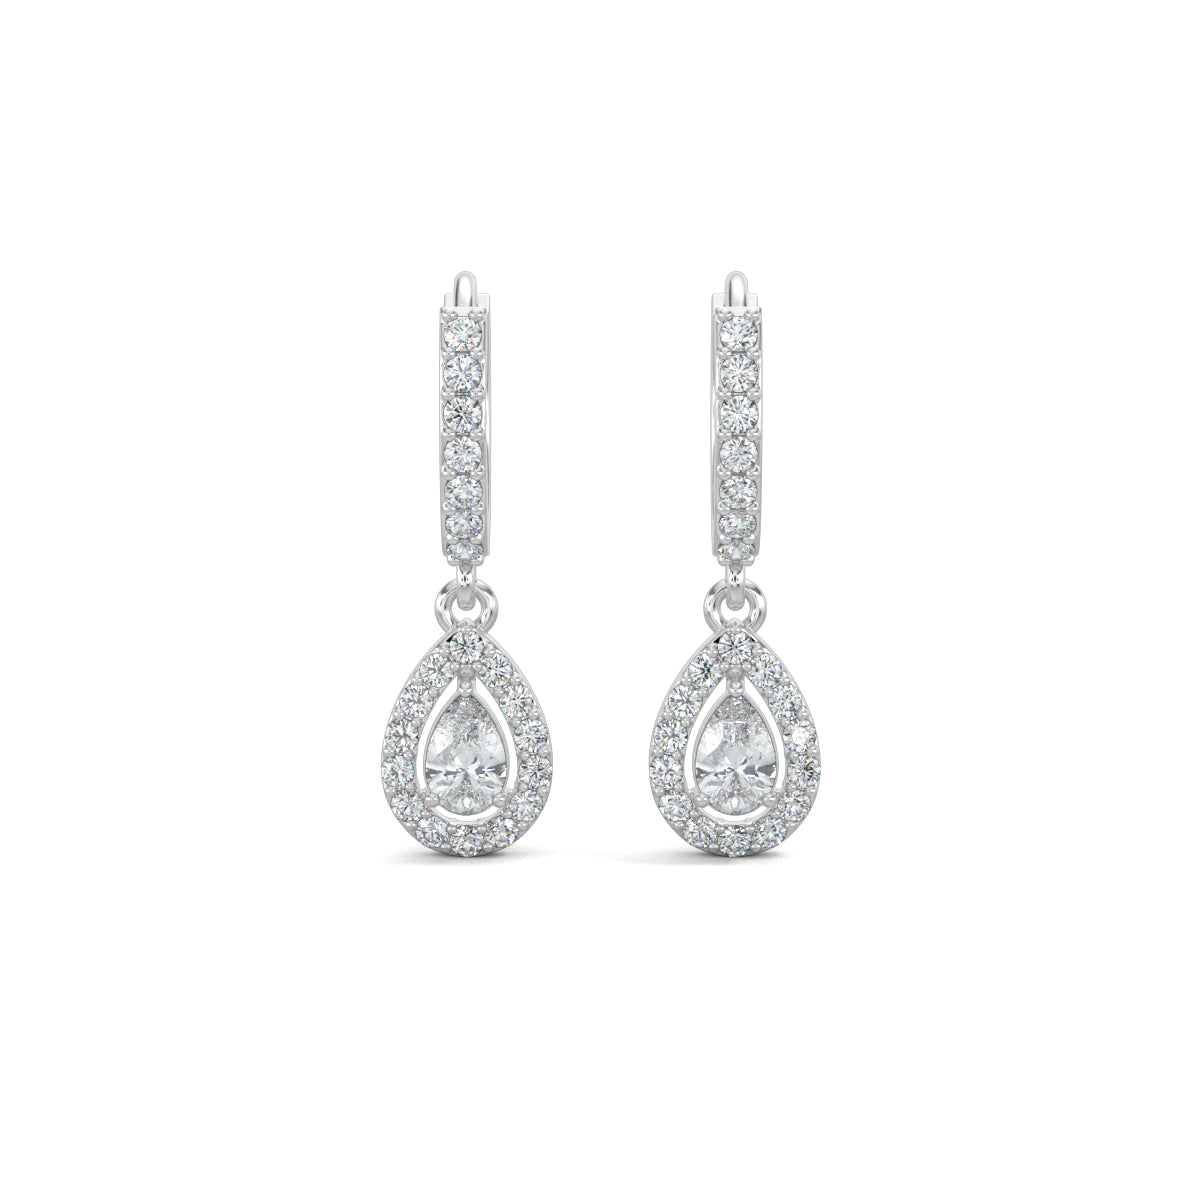 White Gold, Natural diamond dangler earrings, Lab-grown diamond dangler earrings, pave setting, round diamonds, pear diamond, halo setting, modern jewelry, elegant earrings.